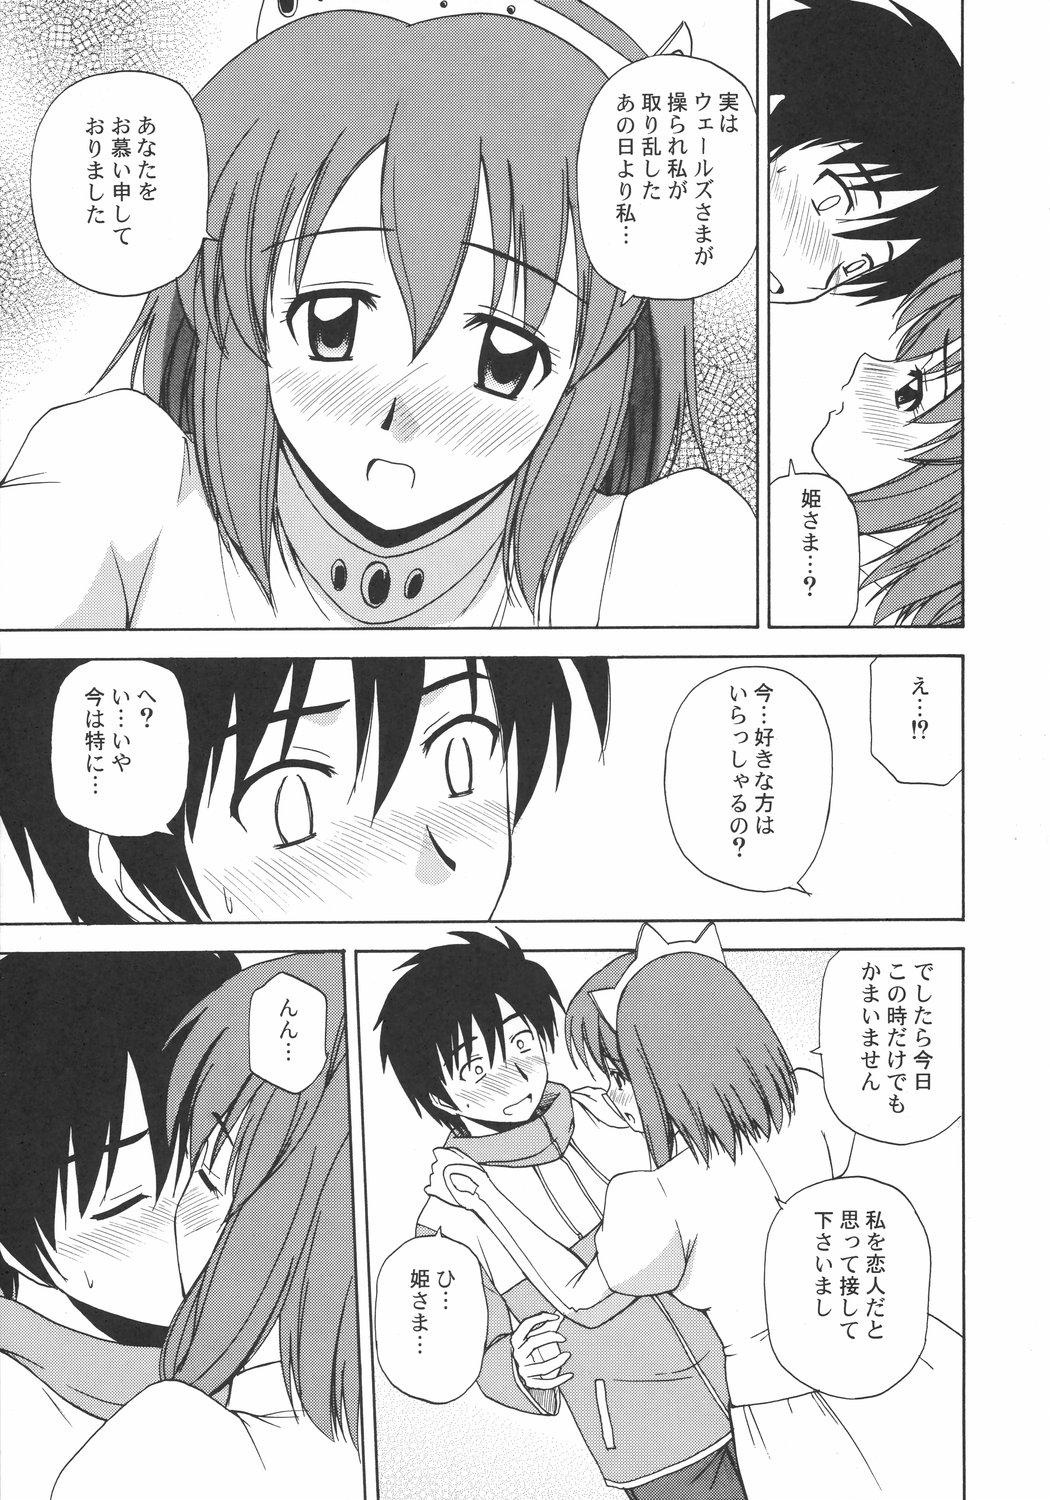 Milfporn Le beau maitre 2 - Zero no tsukaima Orgasm - Page 12